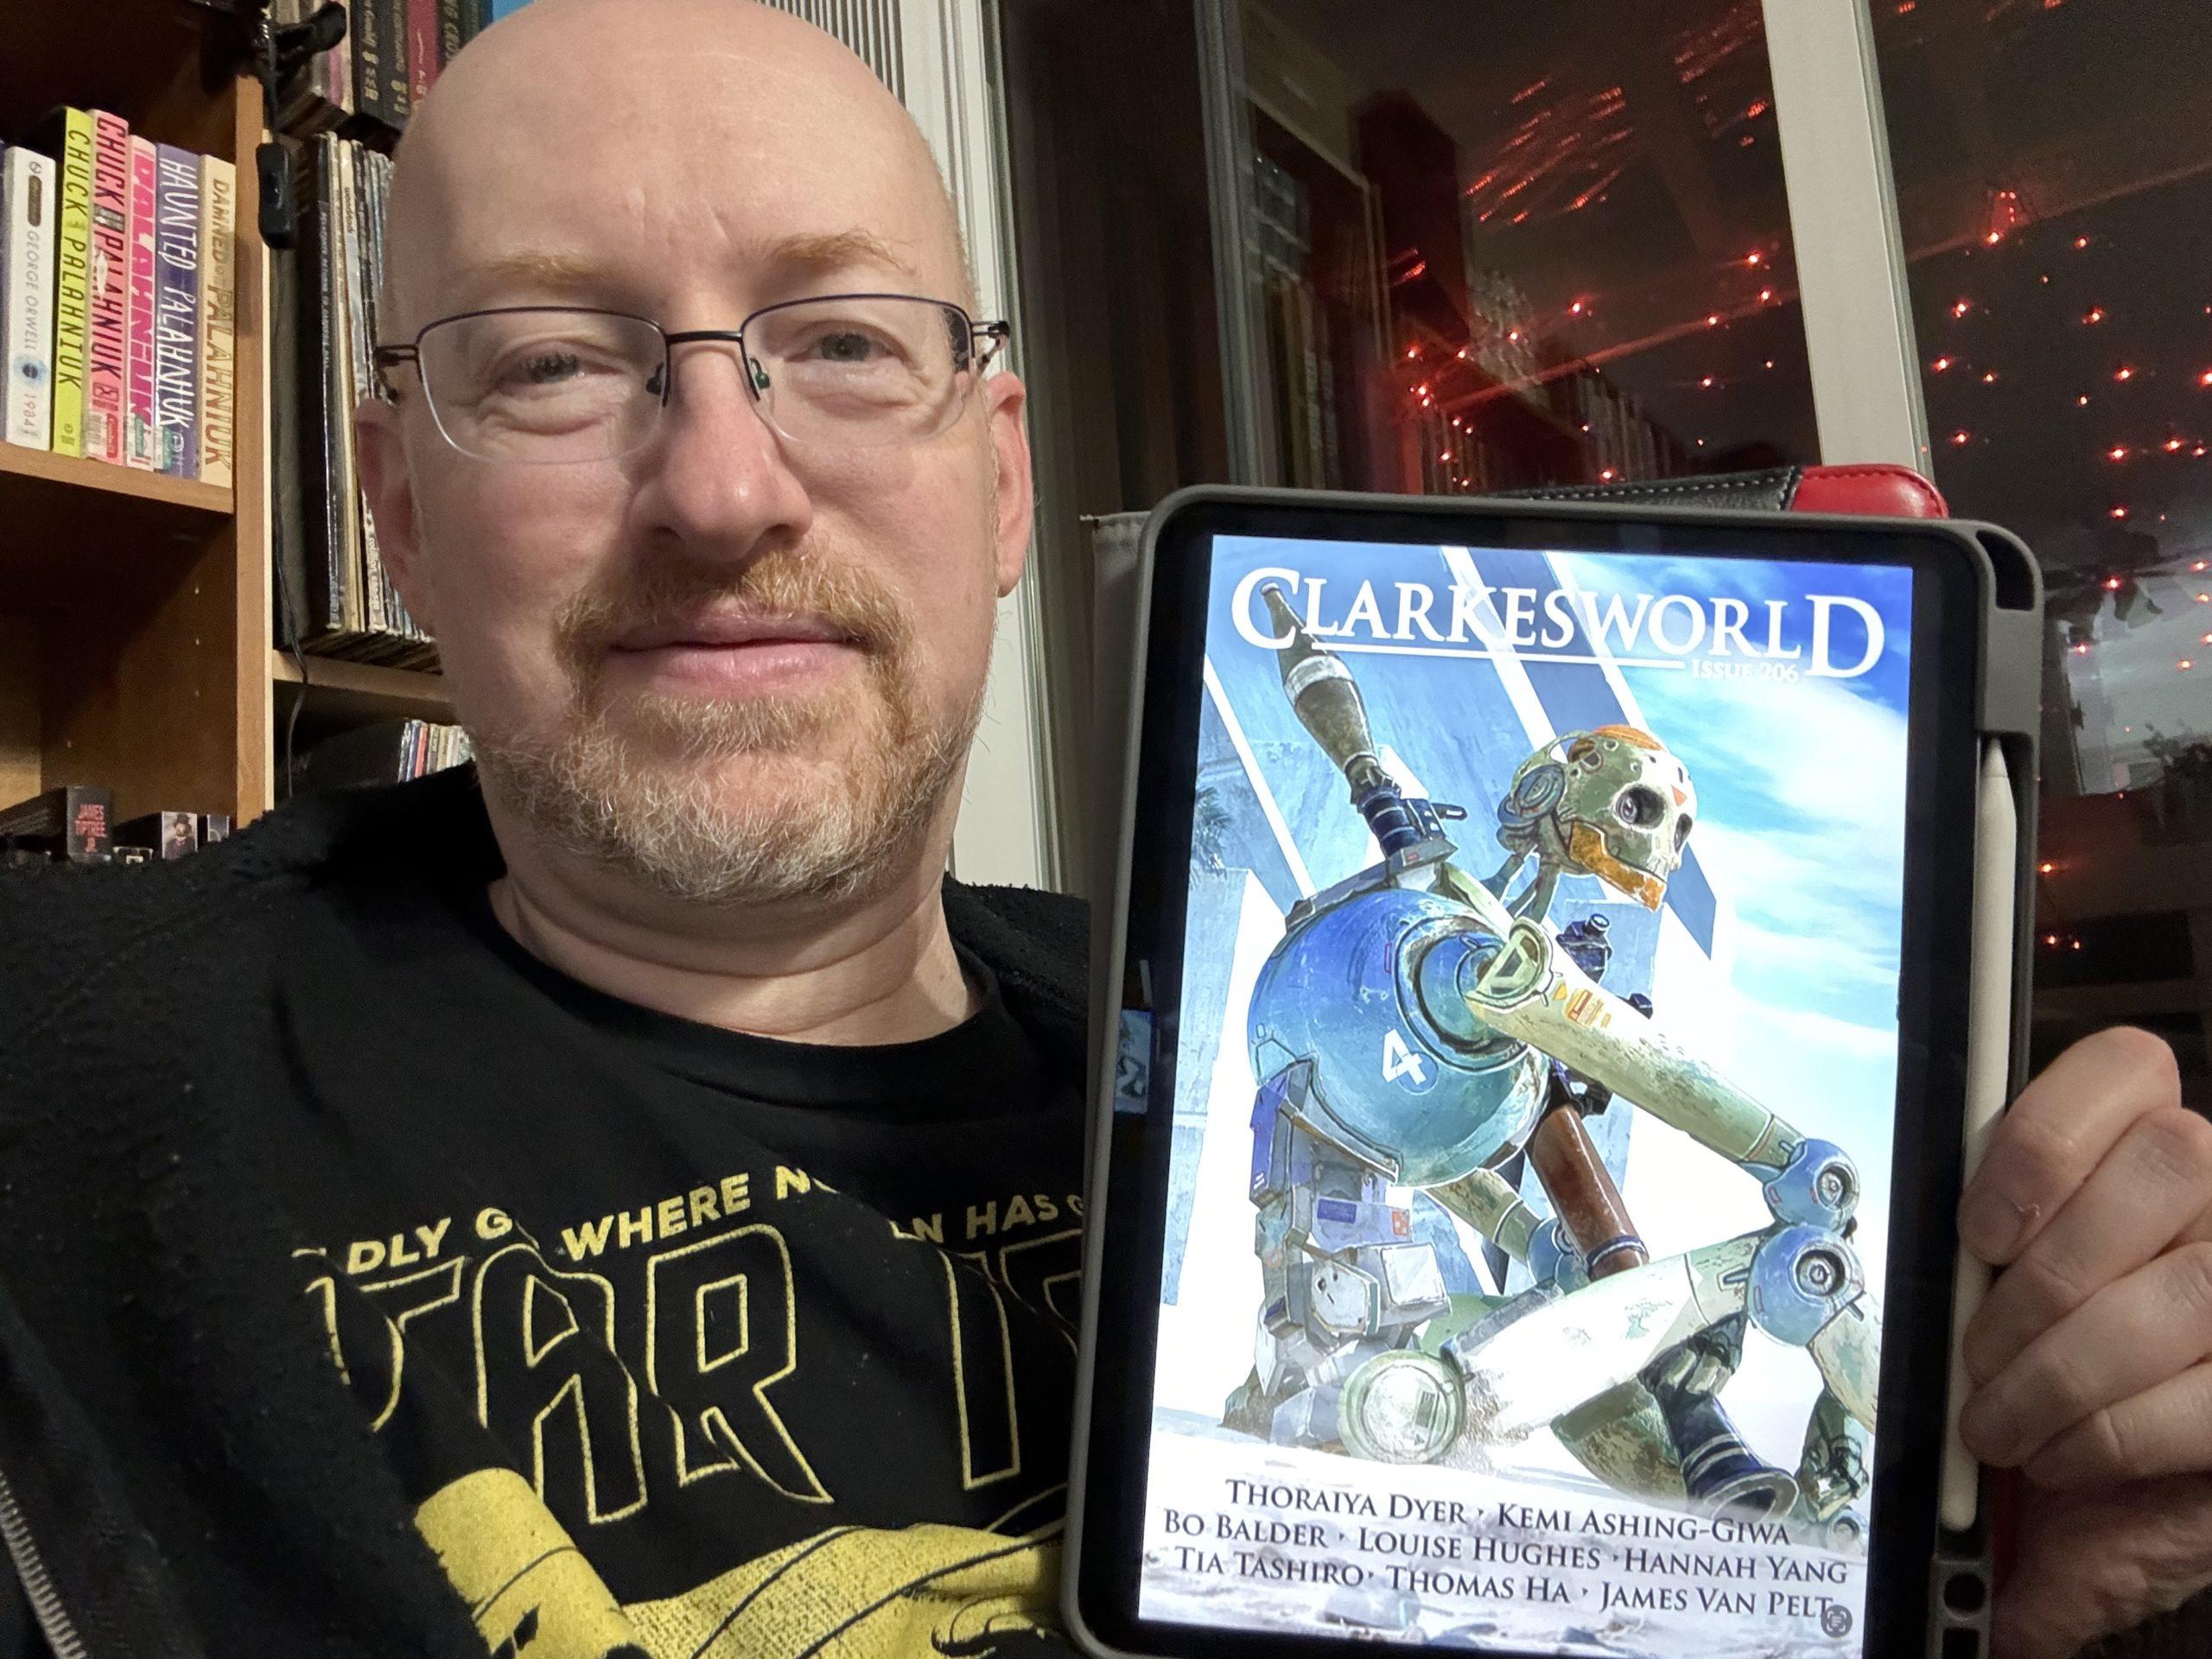 Me holding Clarkesworld Issue 206 on my iPad